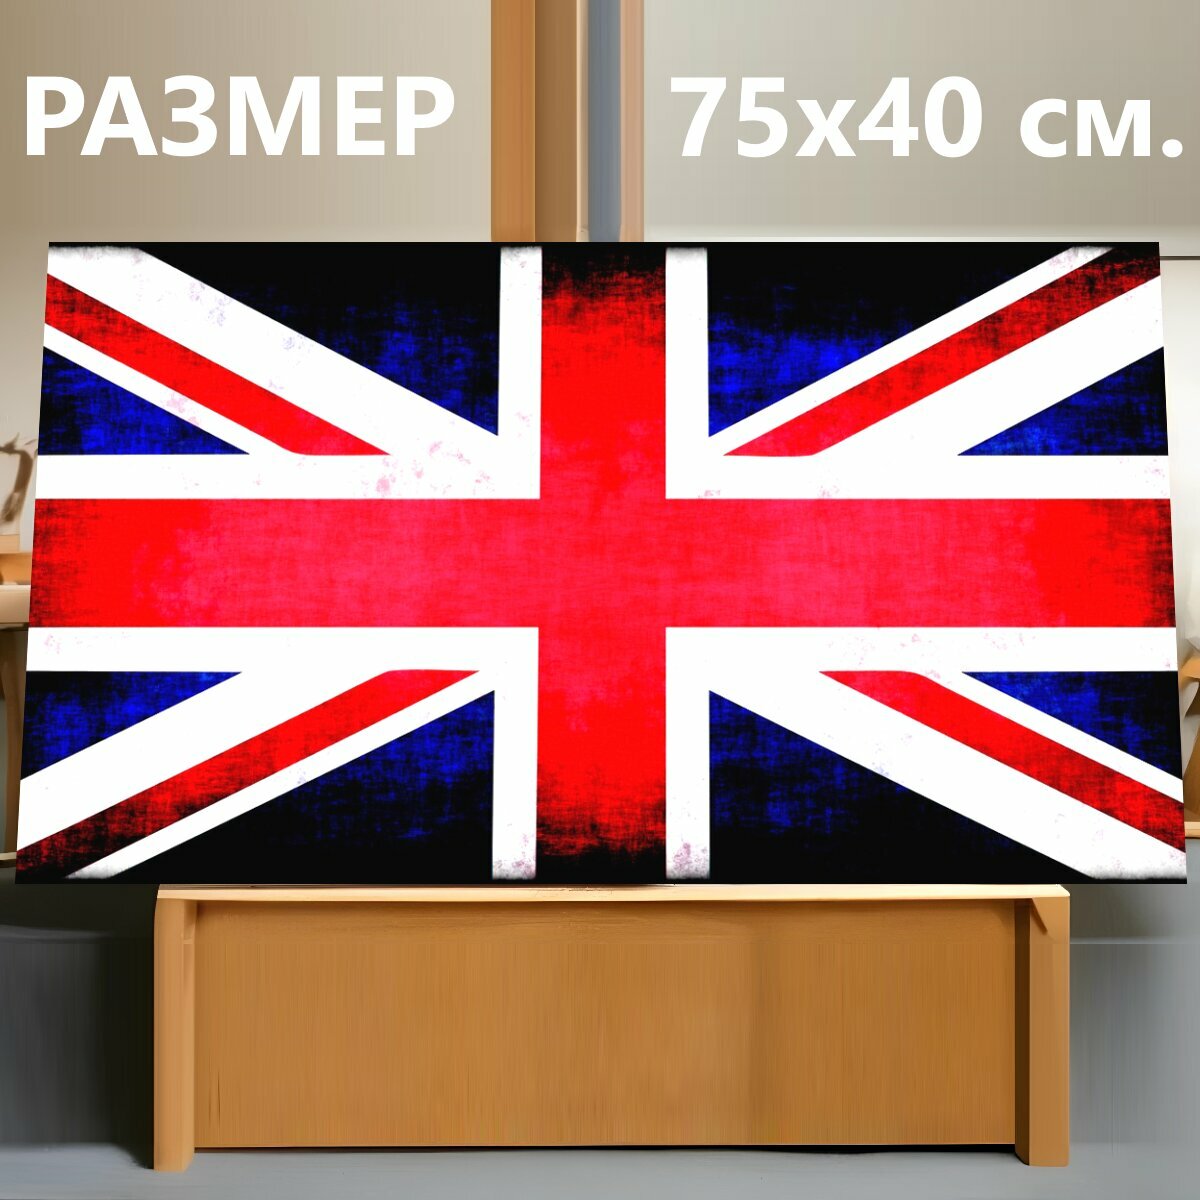 Картина на холсте "Флаг великобритании, юнион джек, великобритания" на подрамнике 75х40 см. для интерьера